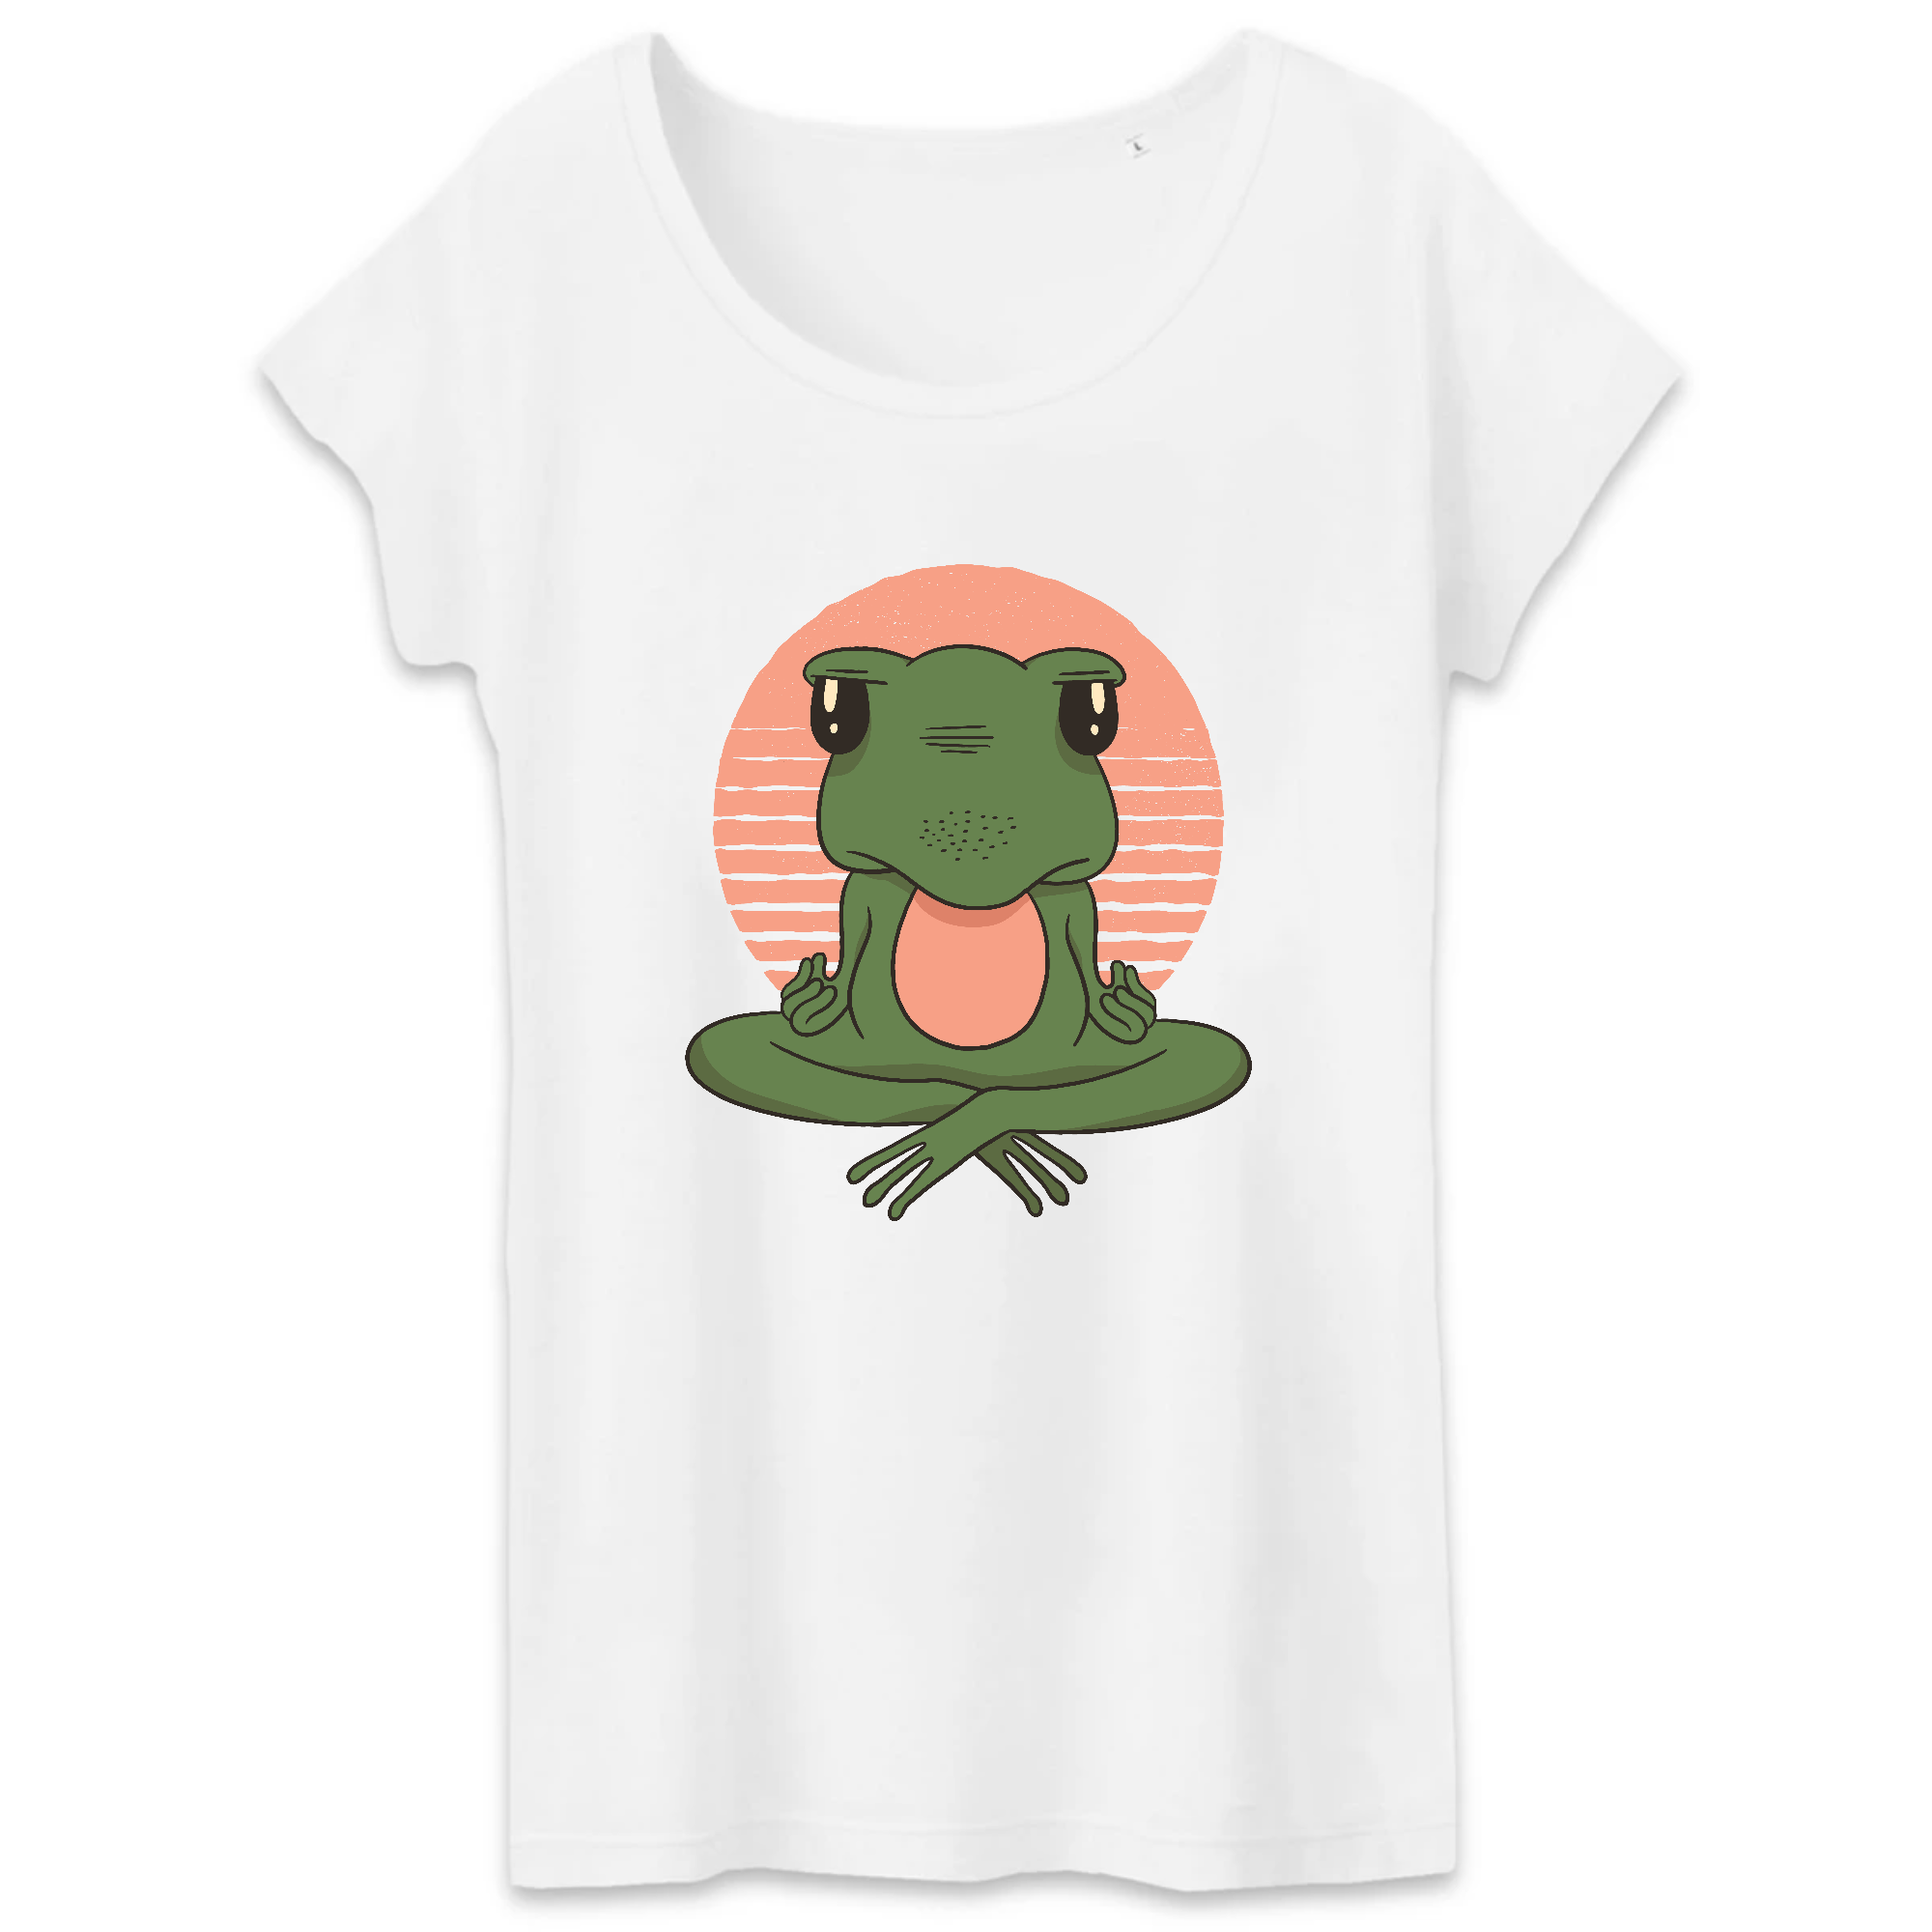 T-shirt Bio-Frog Yoga Vintage Signore